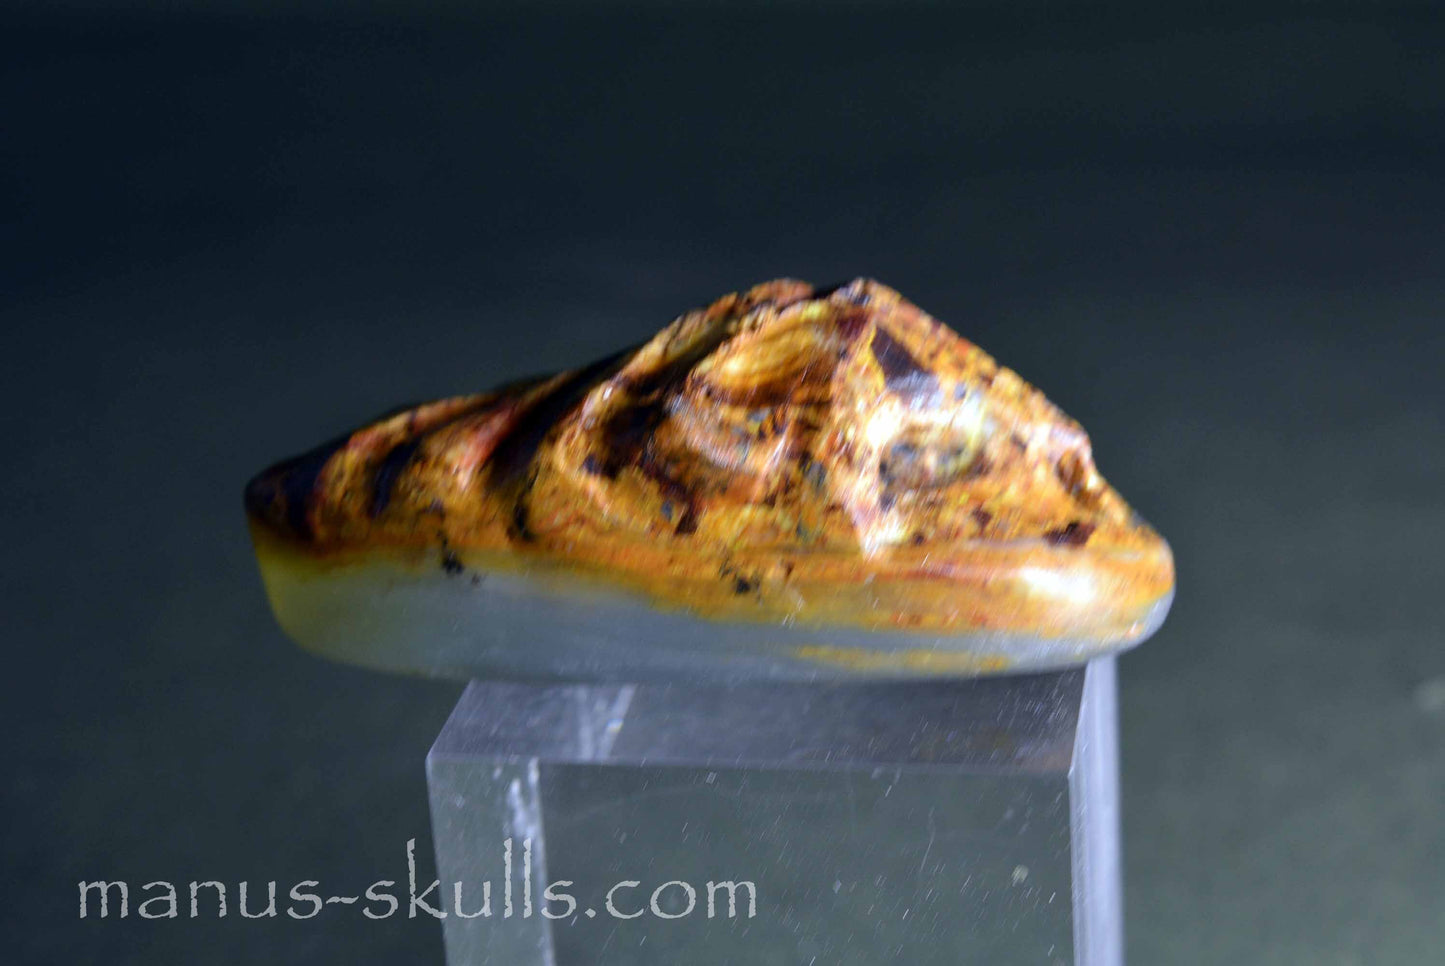 Peruvian Opal Skull